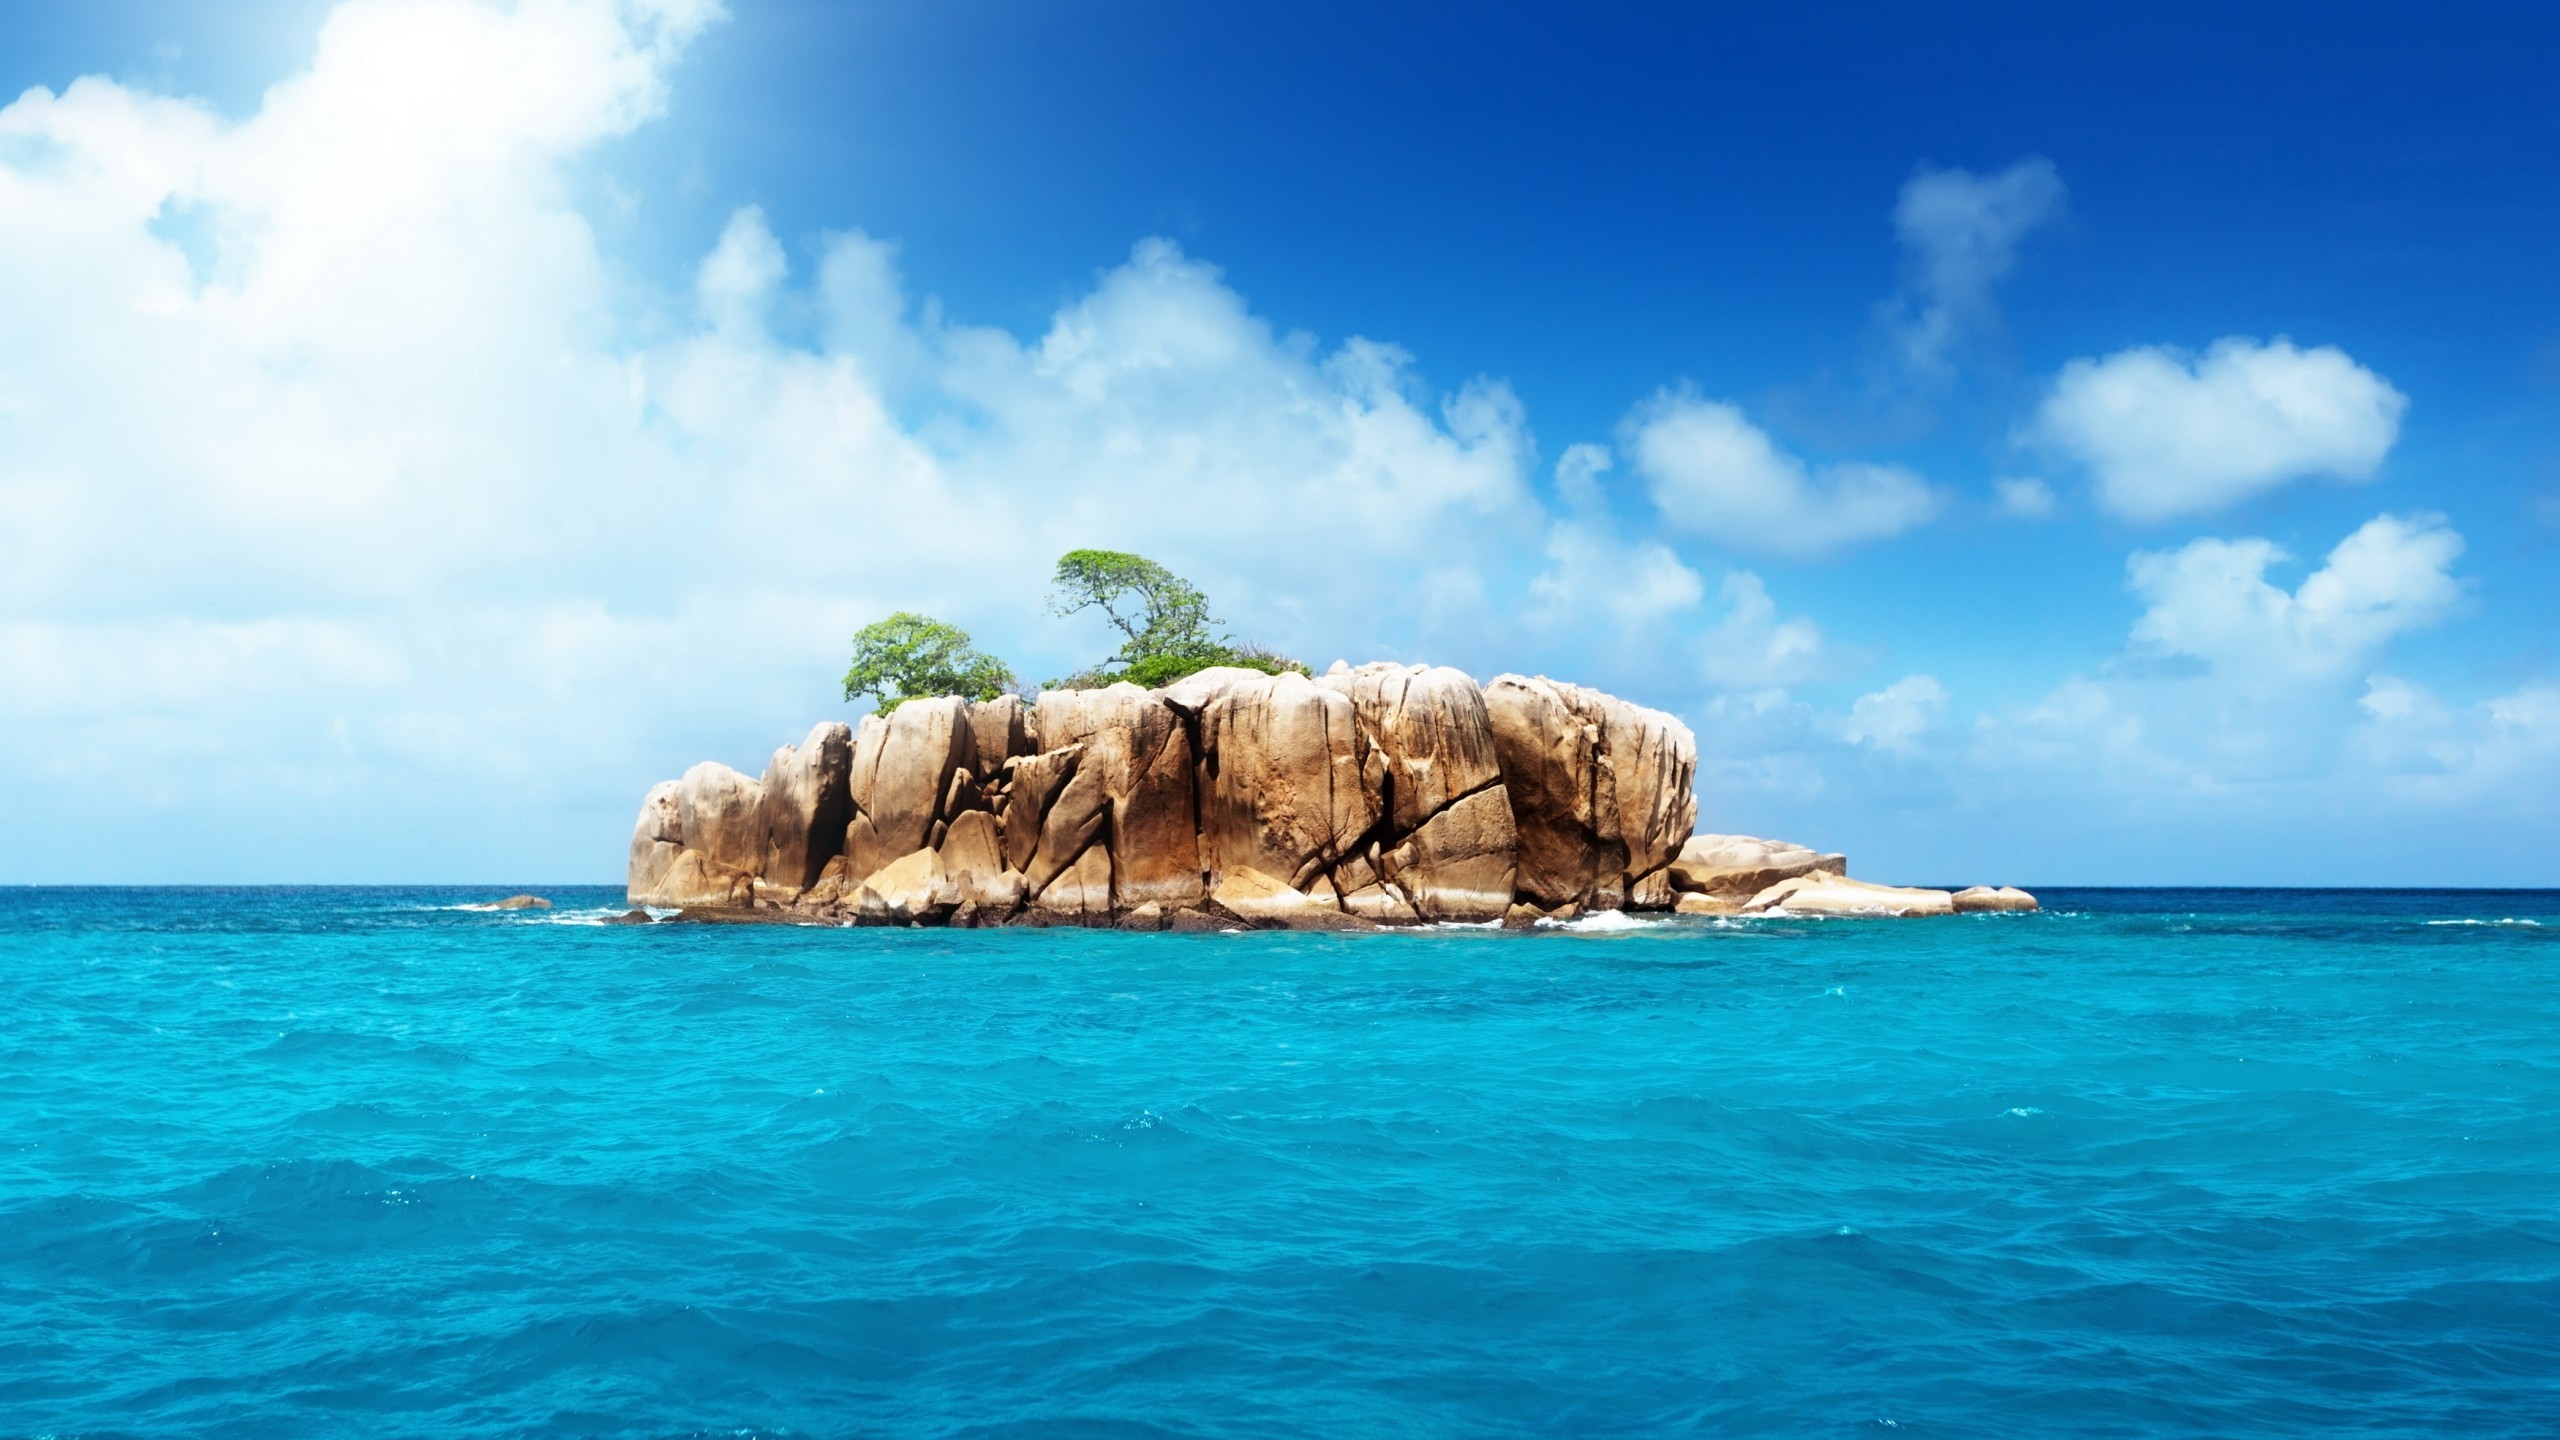 Stone Island for 2560x1440 HDTV resolution